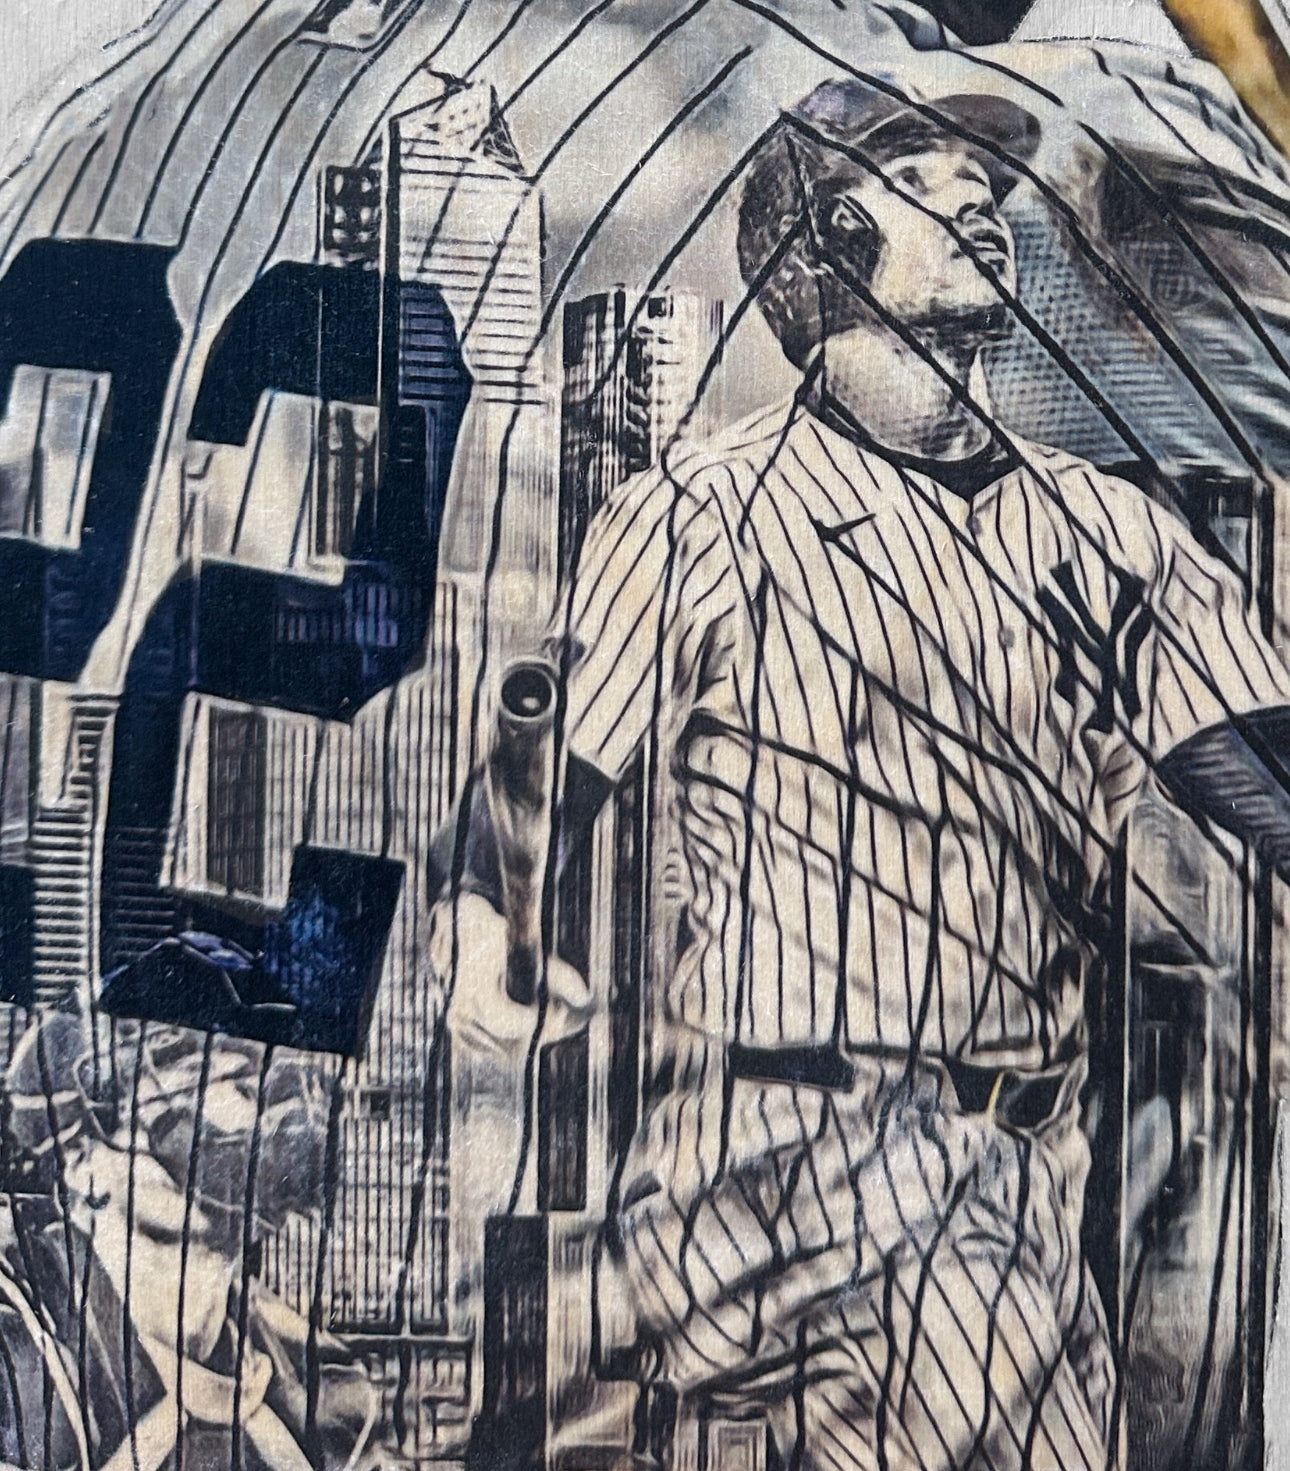 "Soto Pacheco" (Juan Soto) New York Yankees - 1/1 Original on Wood